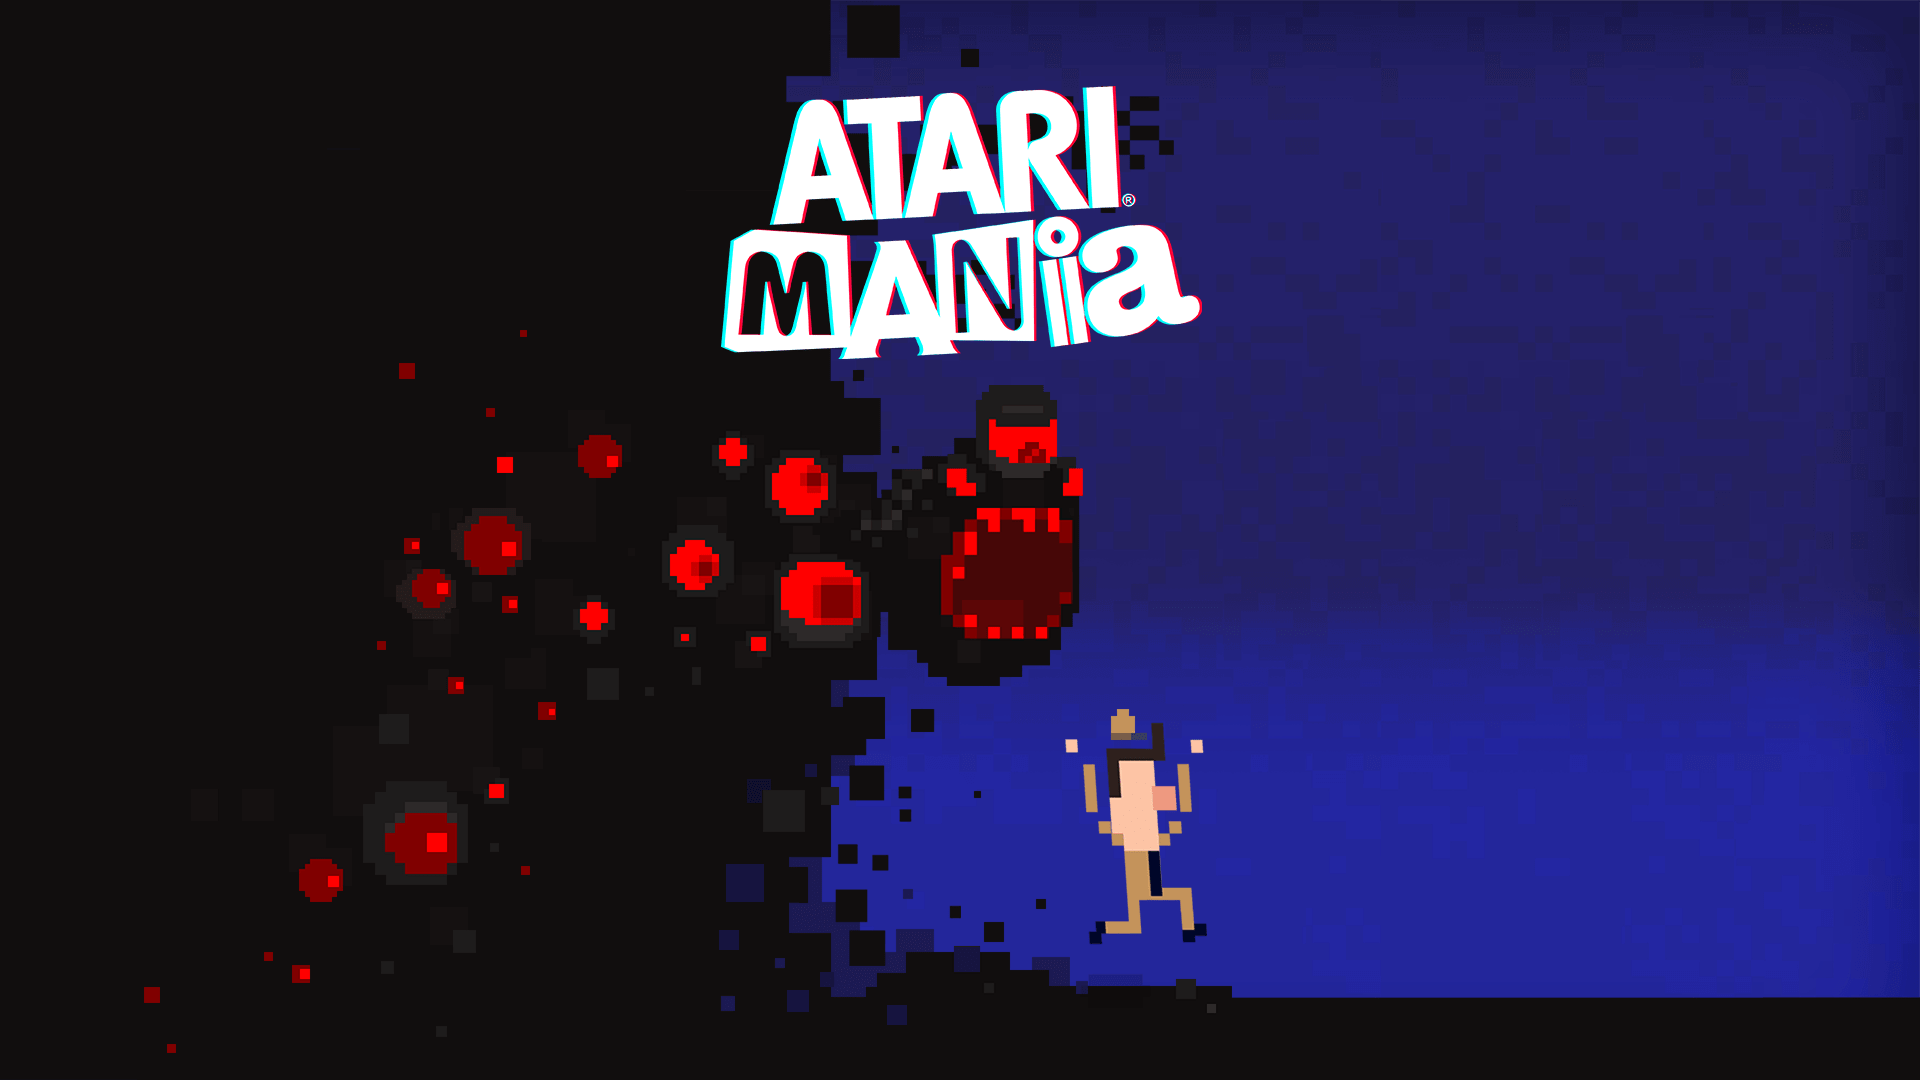 Relive the nostalgia with Atari games in Atari Mania!